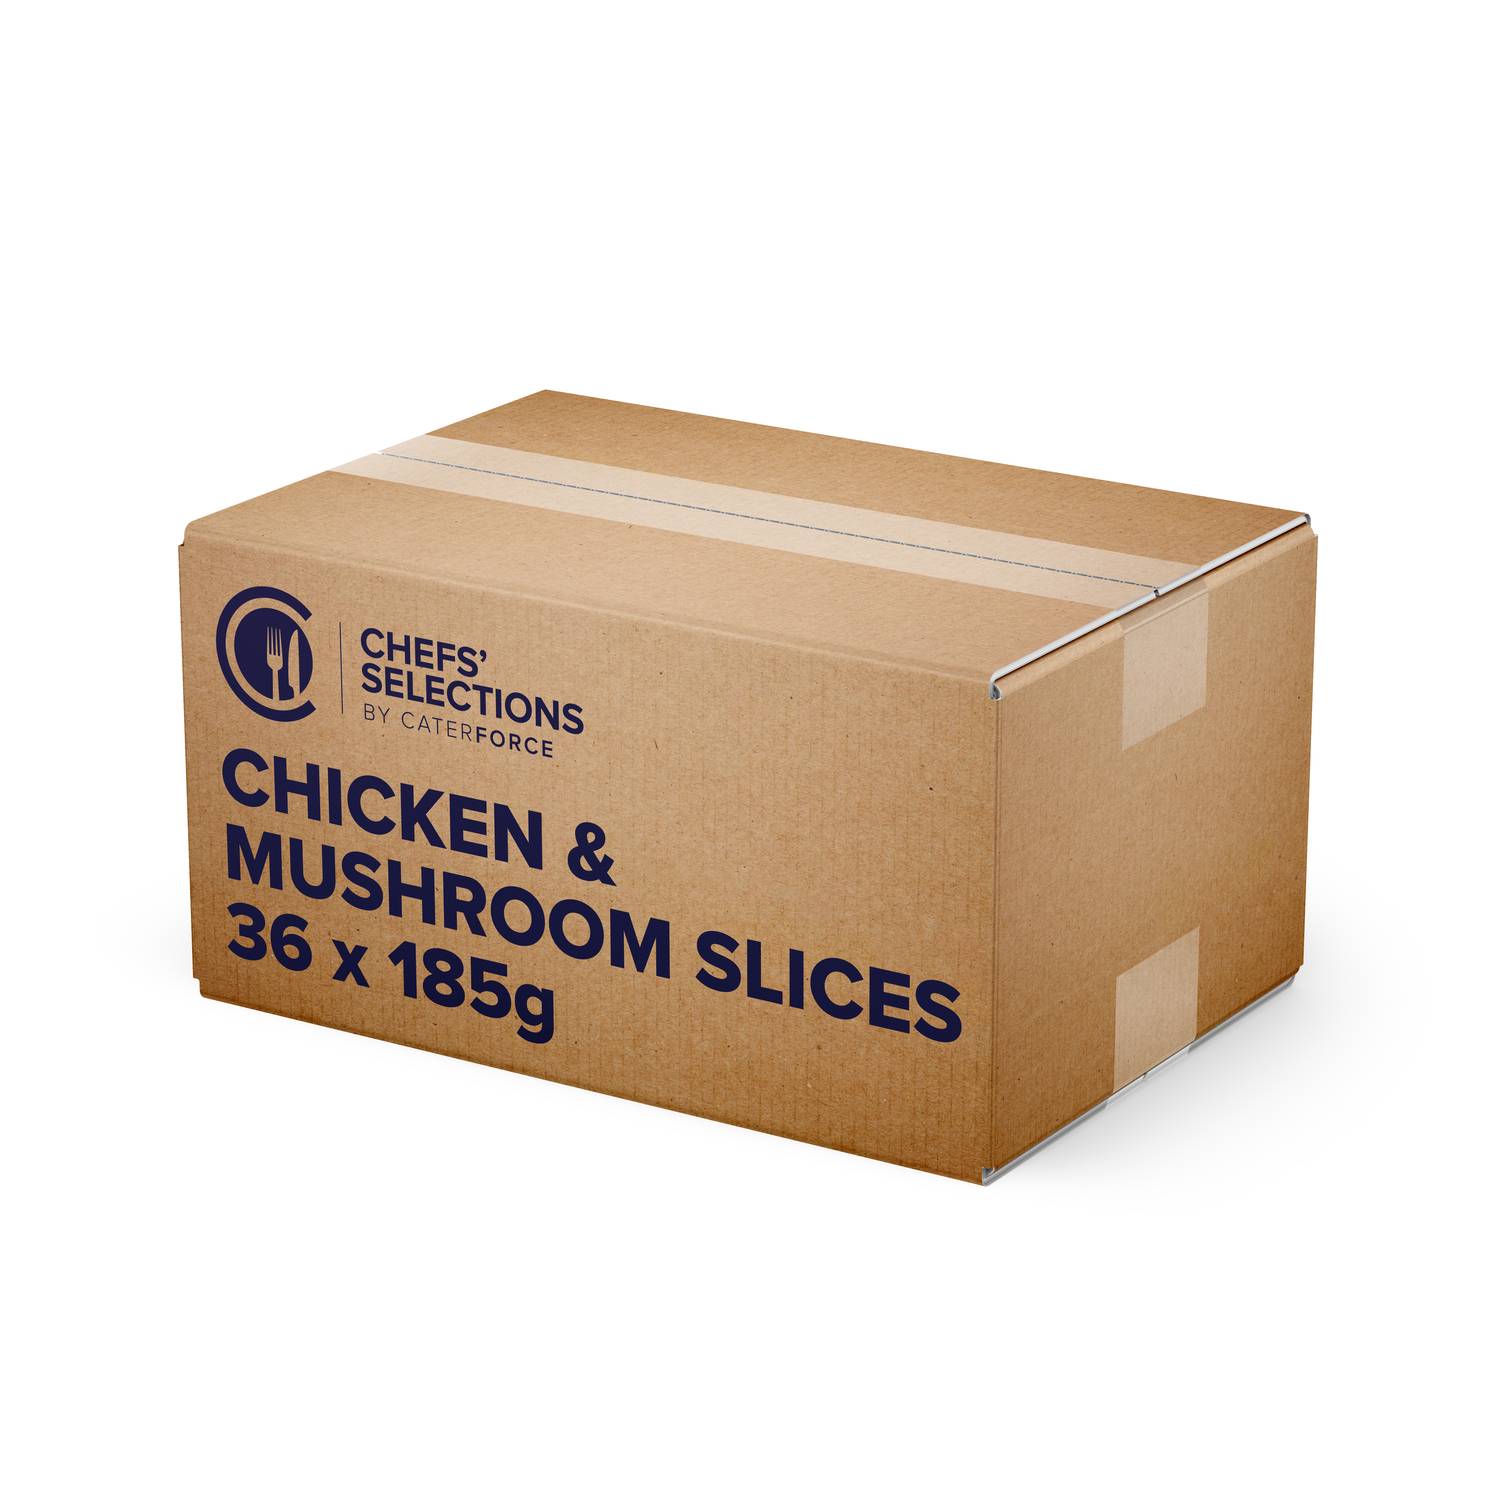 Chefs’ Selections Chicken & Mushroom Slice (36 x 185g)